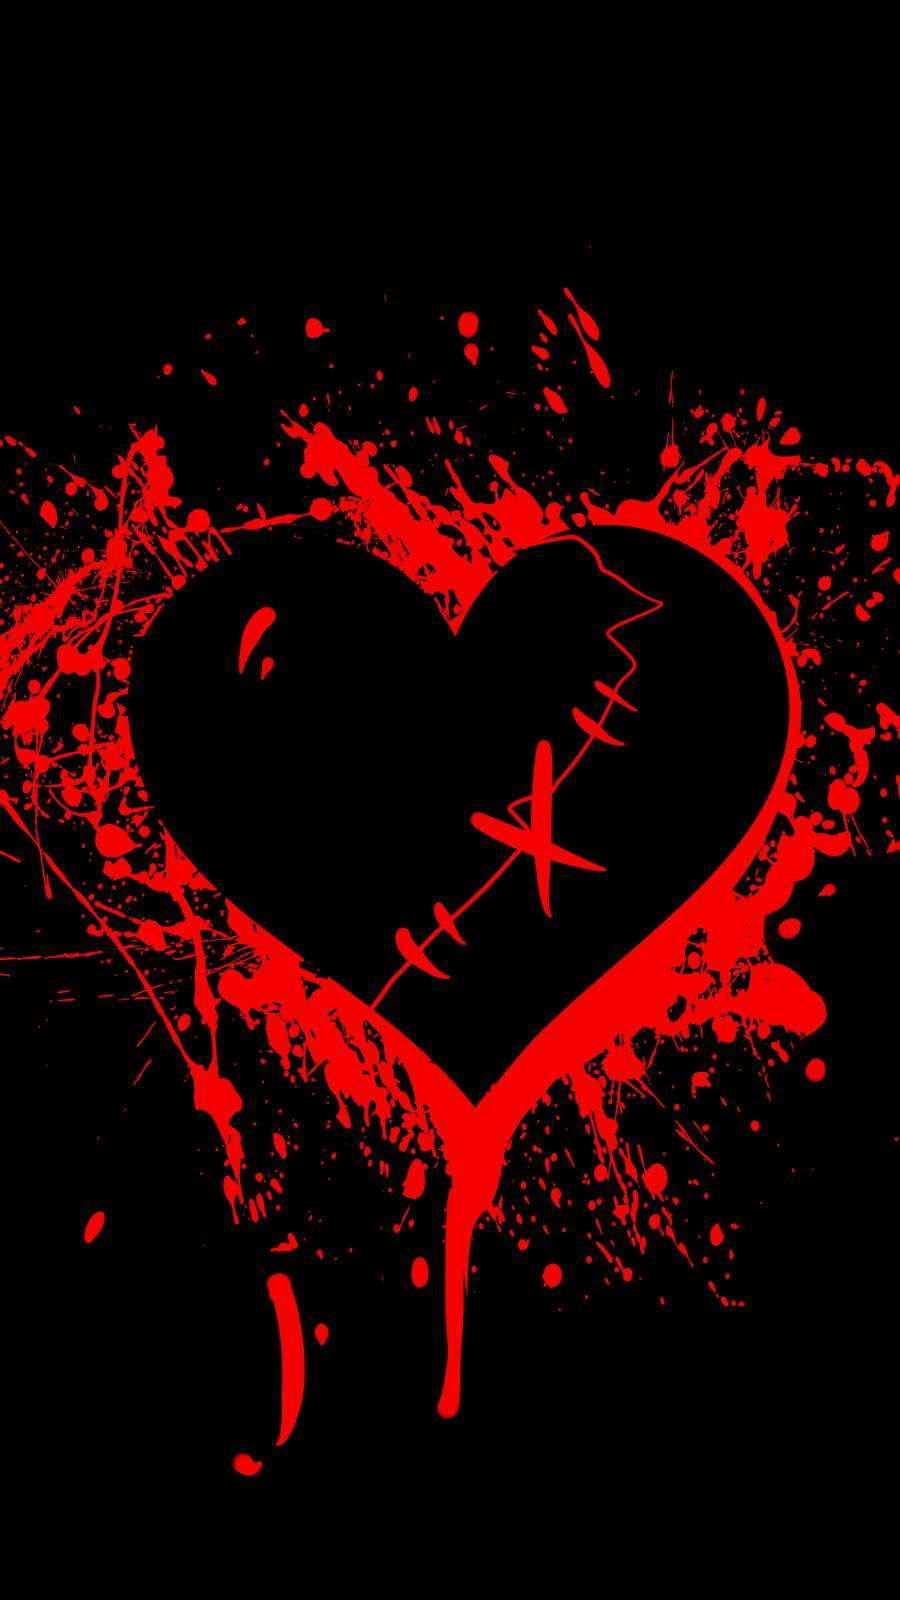 Bloody Red Broken Heart Black Background